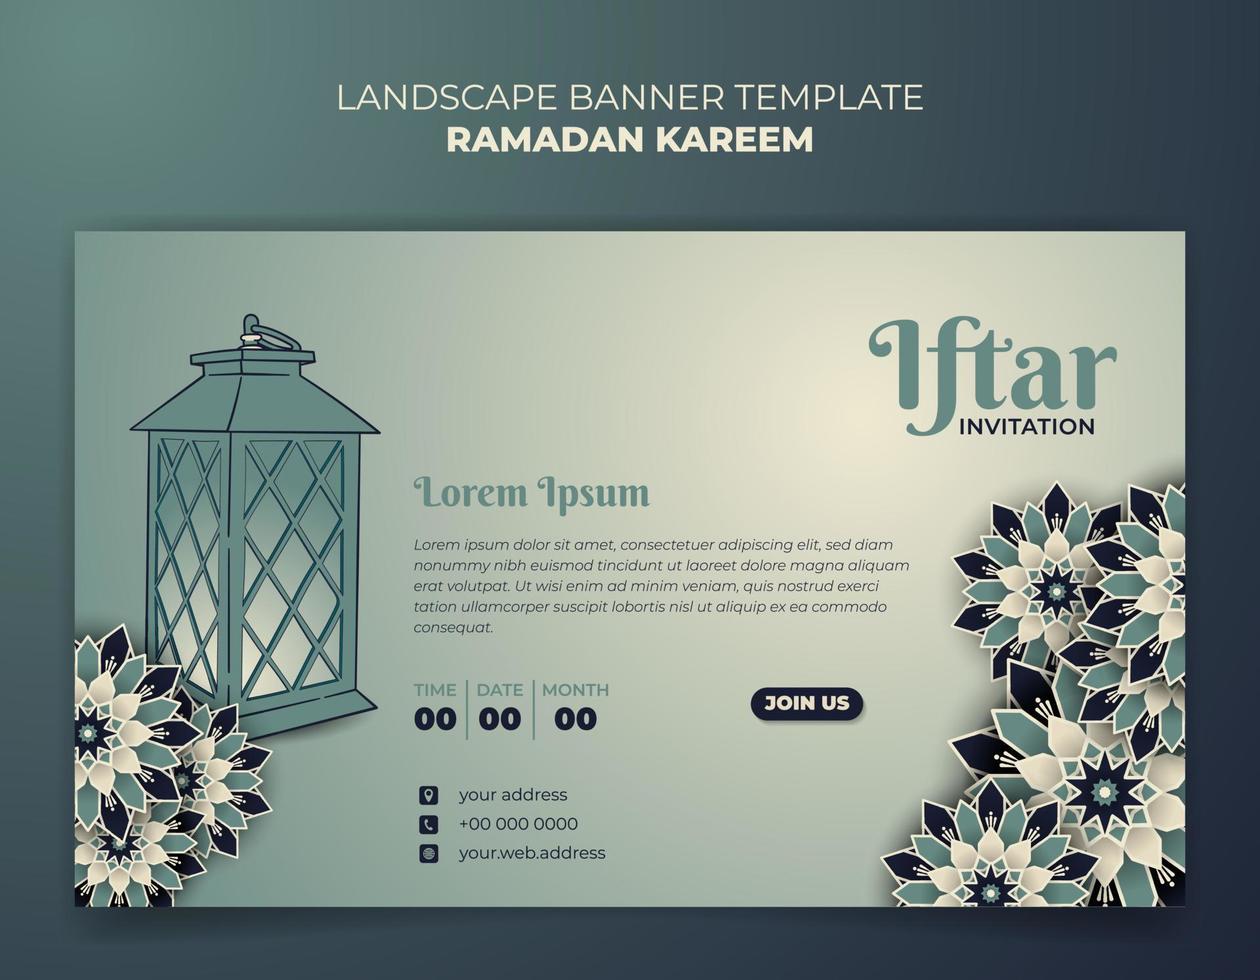 paisaje bandera modelo con mano dibujado linterna y ornamental antecedentes para Ramadán kareem vector